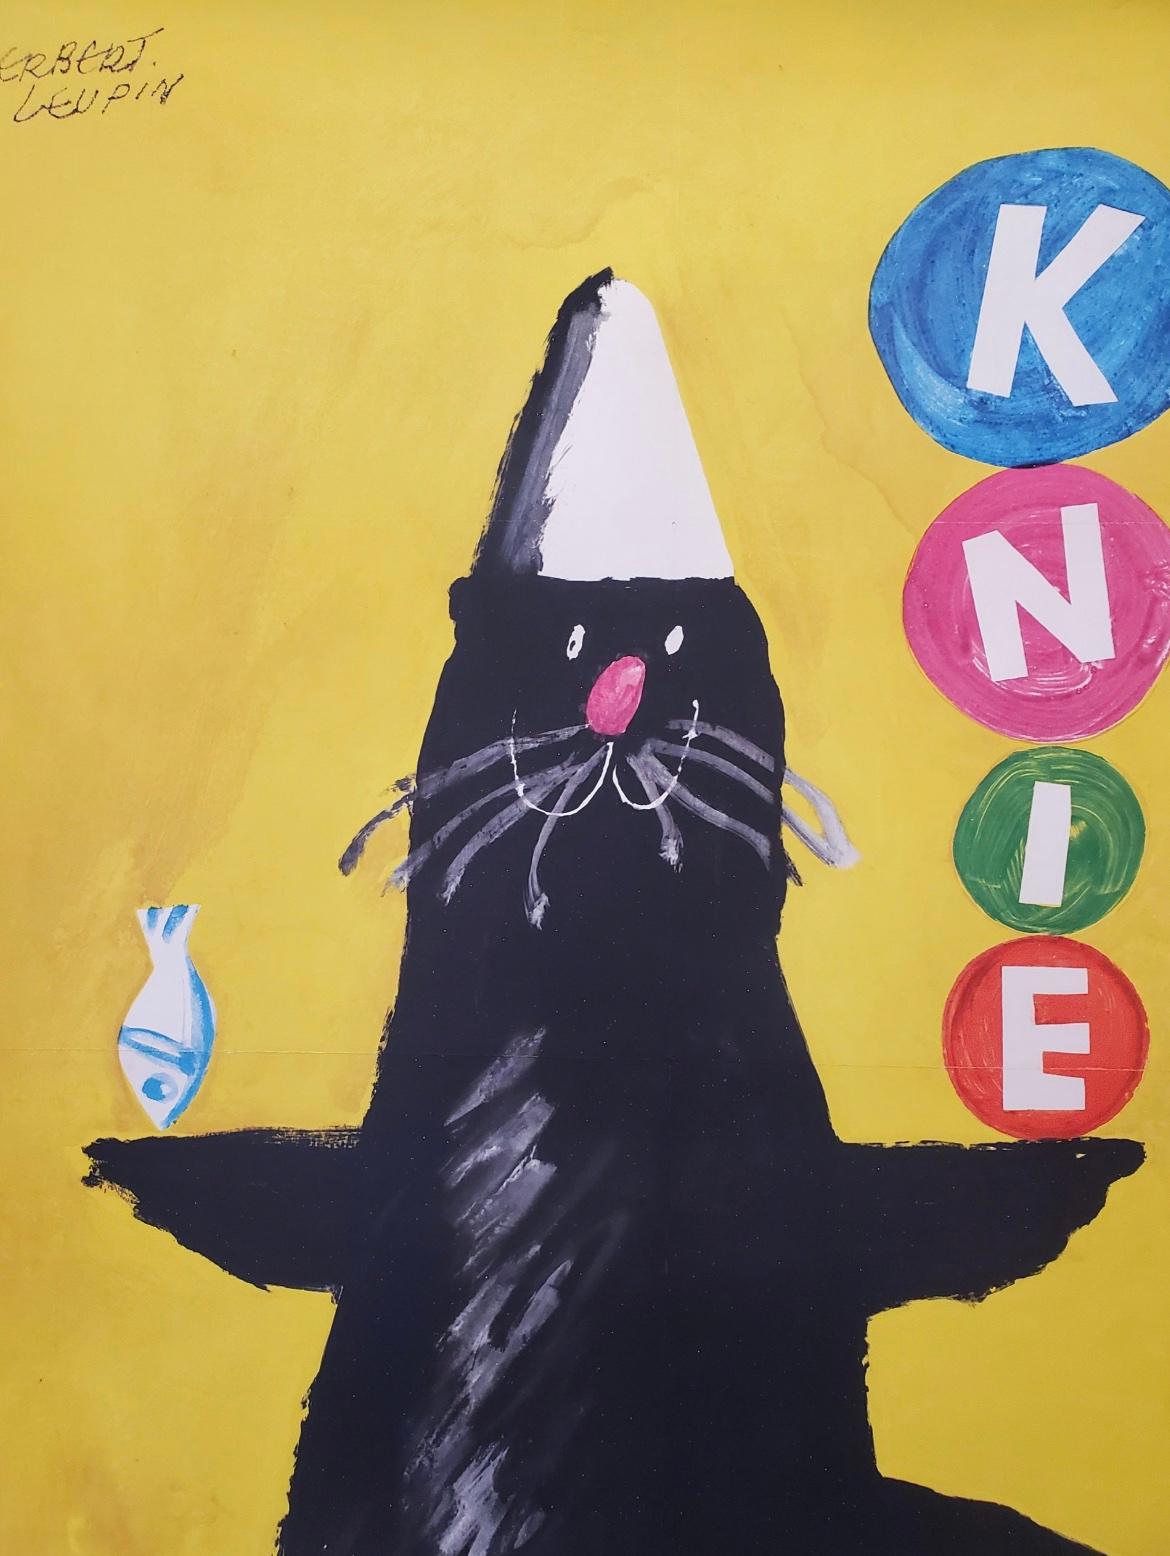 Other Knies Kinderzoo, Original Vintage Poster Circa 1964, by Herbert Leupin